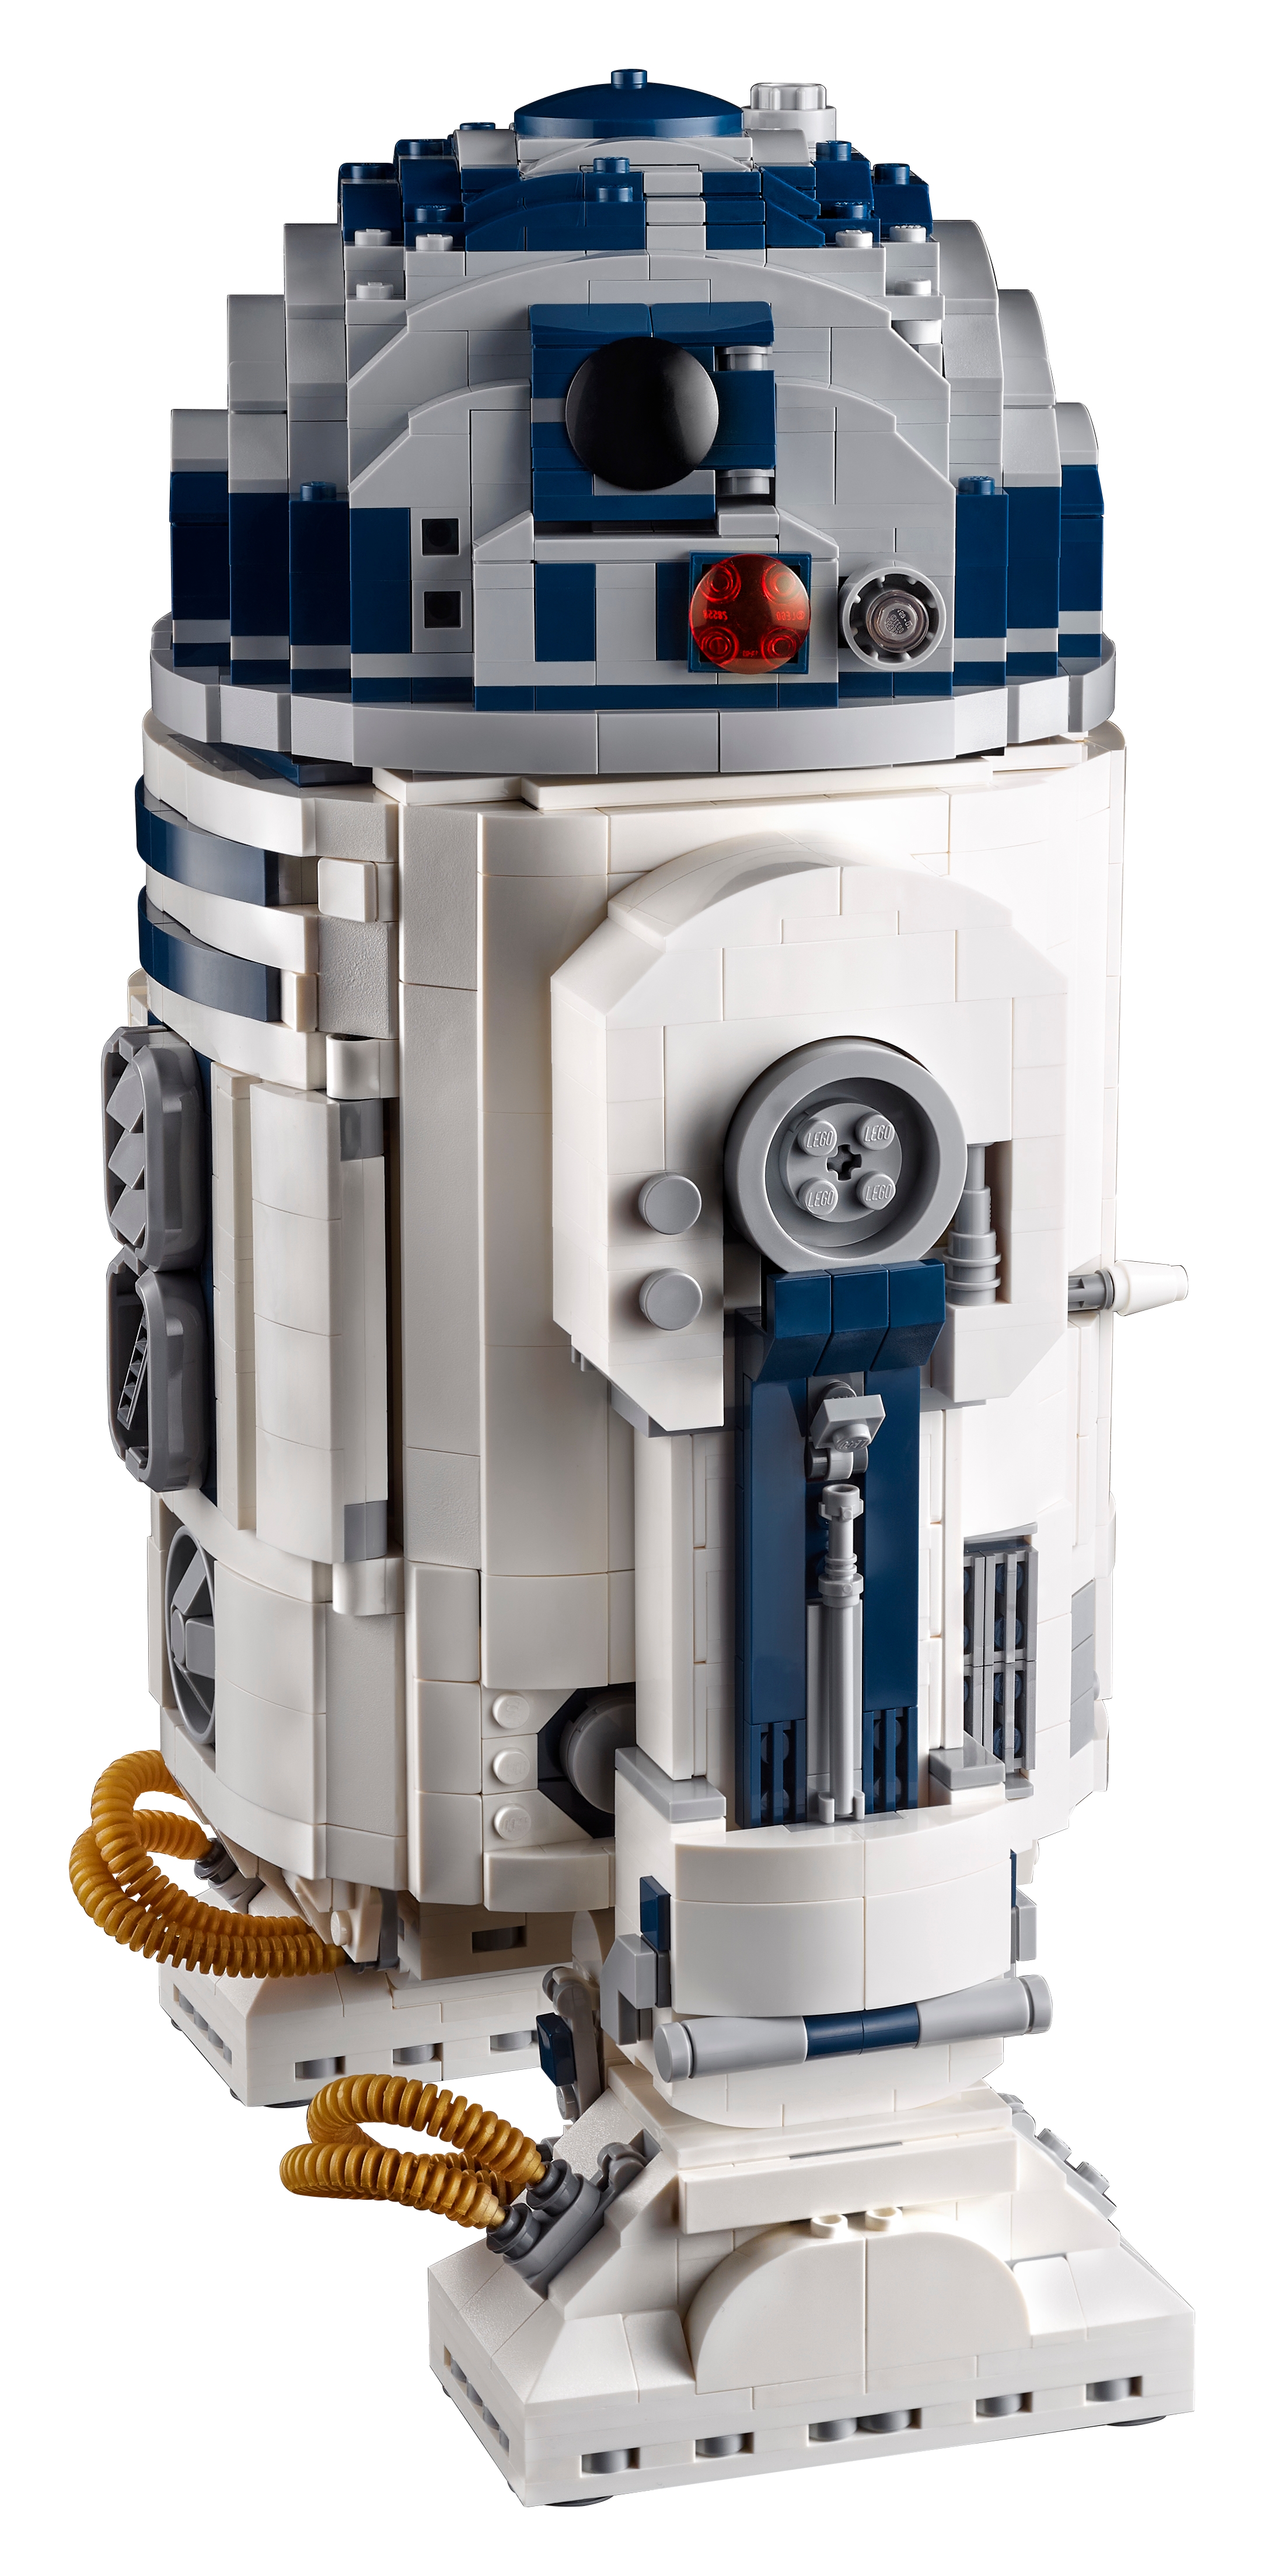 R2-D2™ 75308 LEGO® Star Wars™  Compre online na Loja oficial LEGO® BR -  LegoEducation